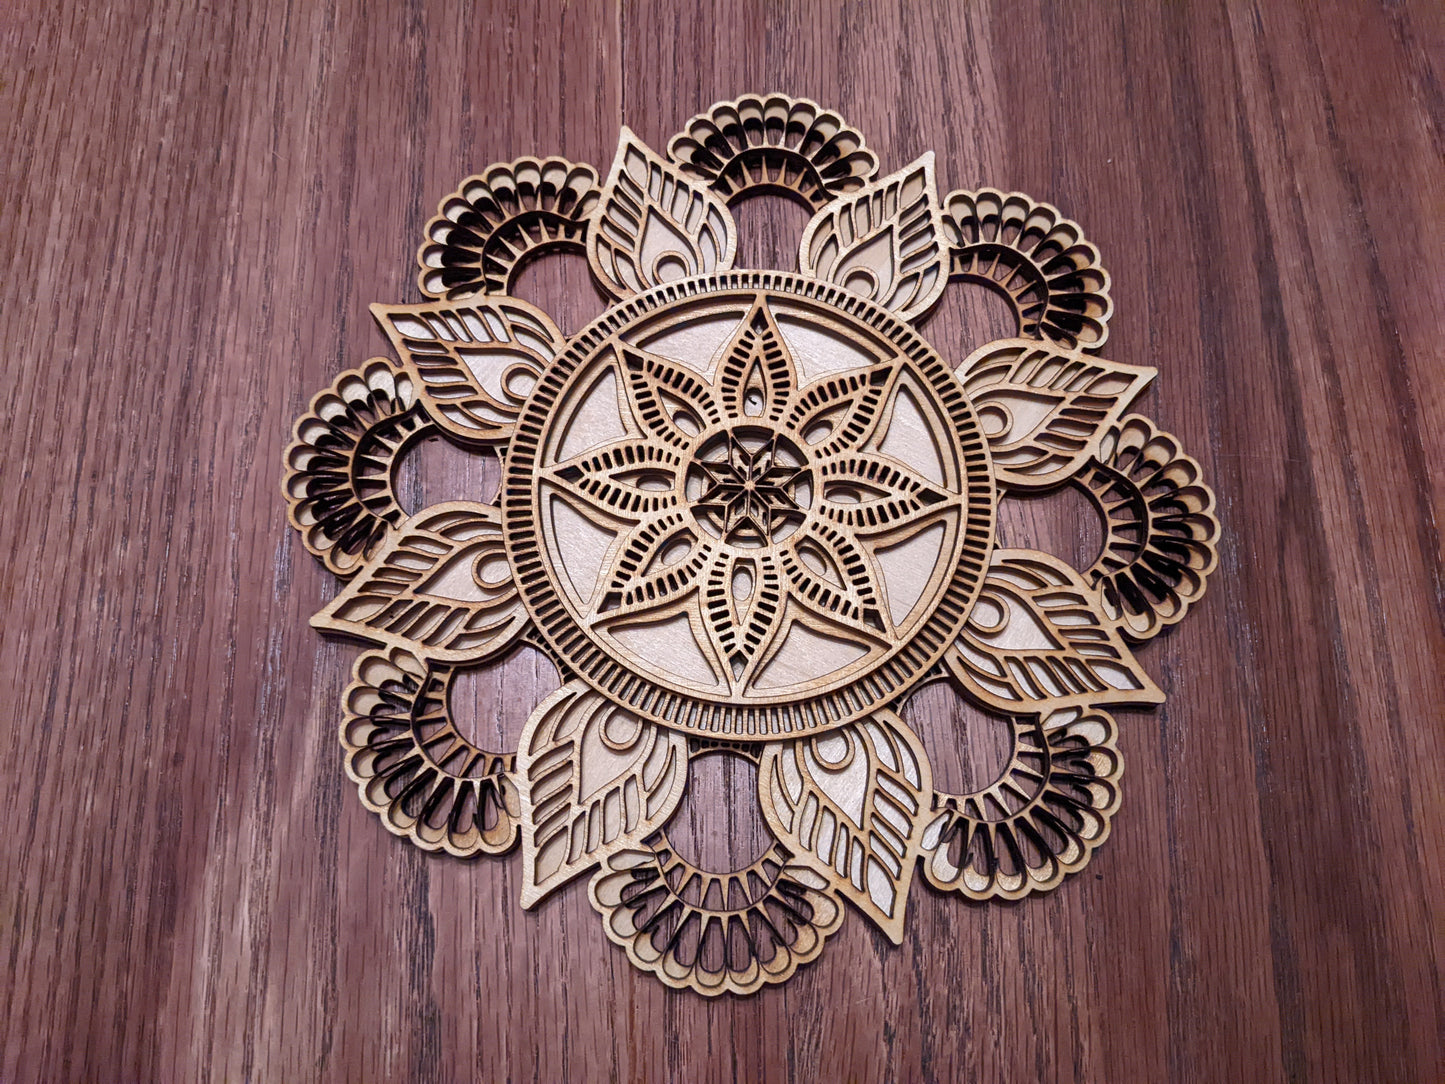 DIY Mandala Painting | Wood | Decor | Gift for painters | DIY Craft Kit